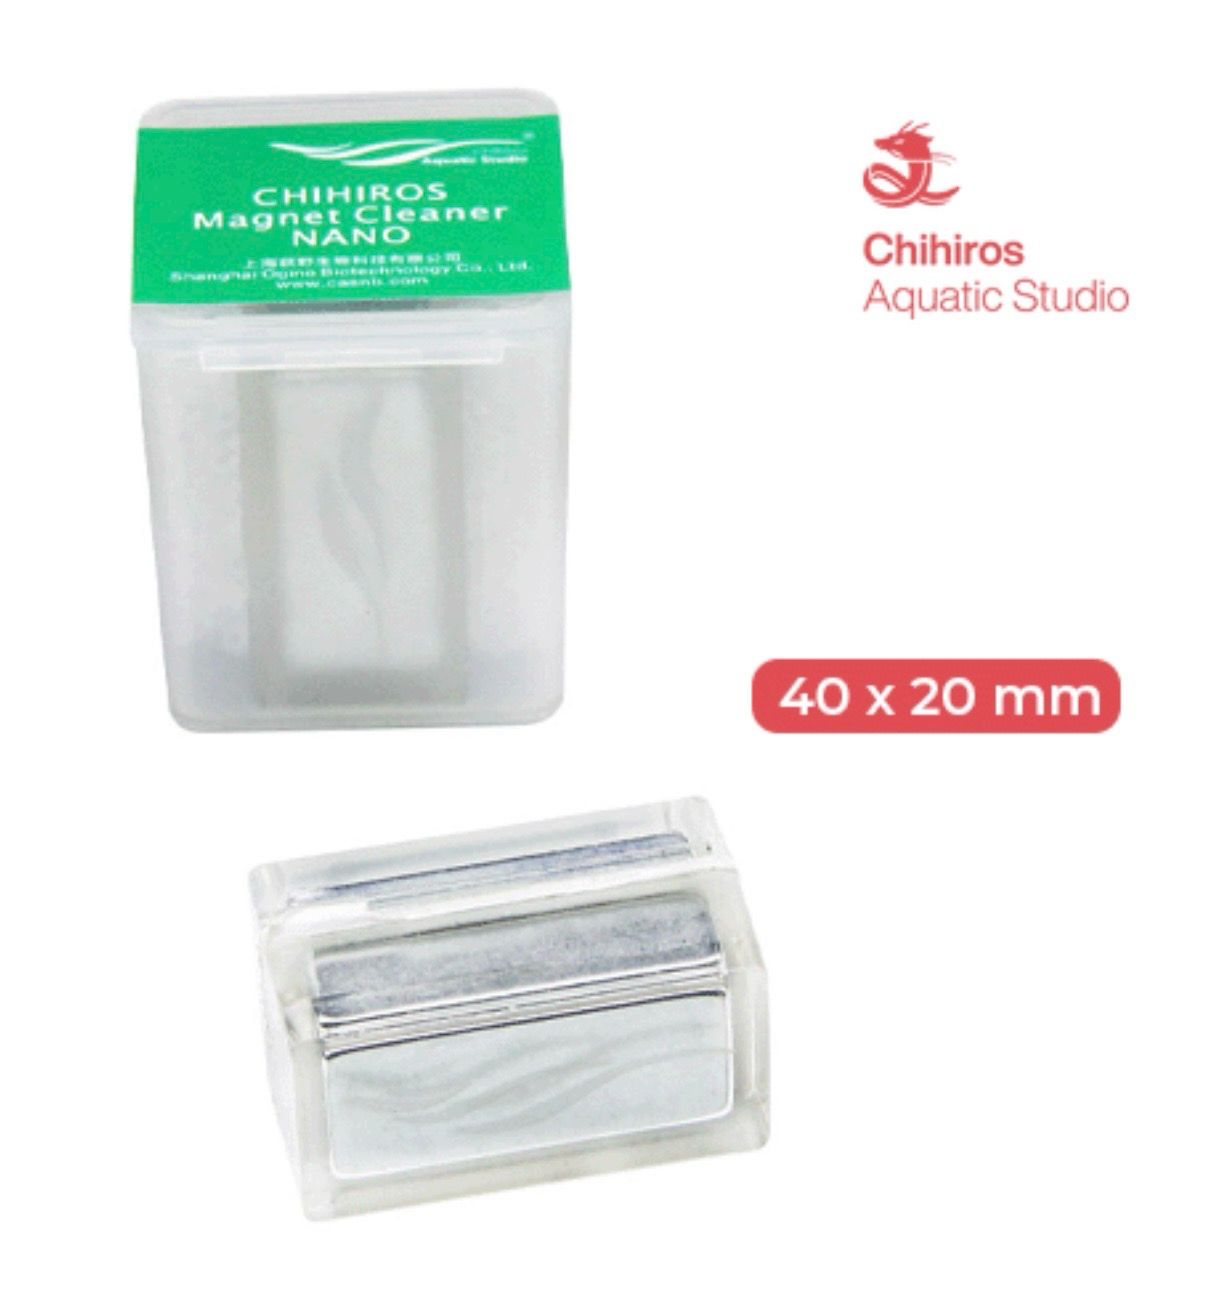 Chihiros Magnet Cleaner Nano 40×20 mm